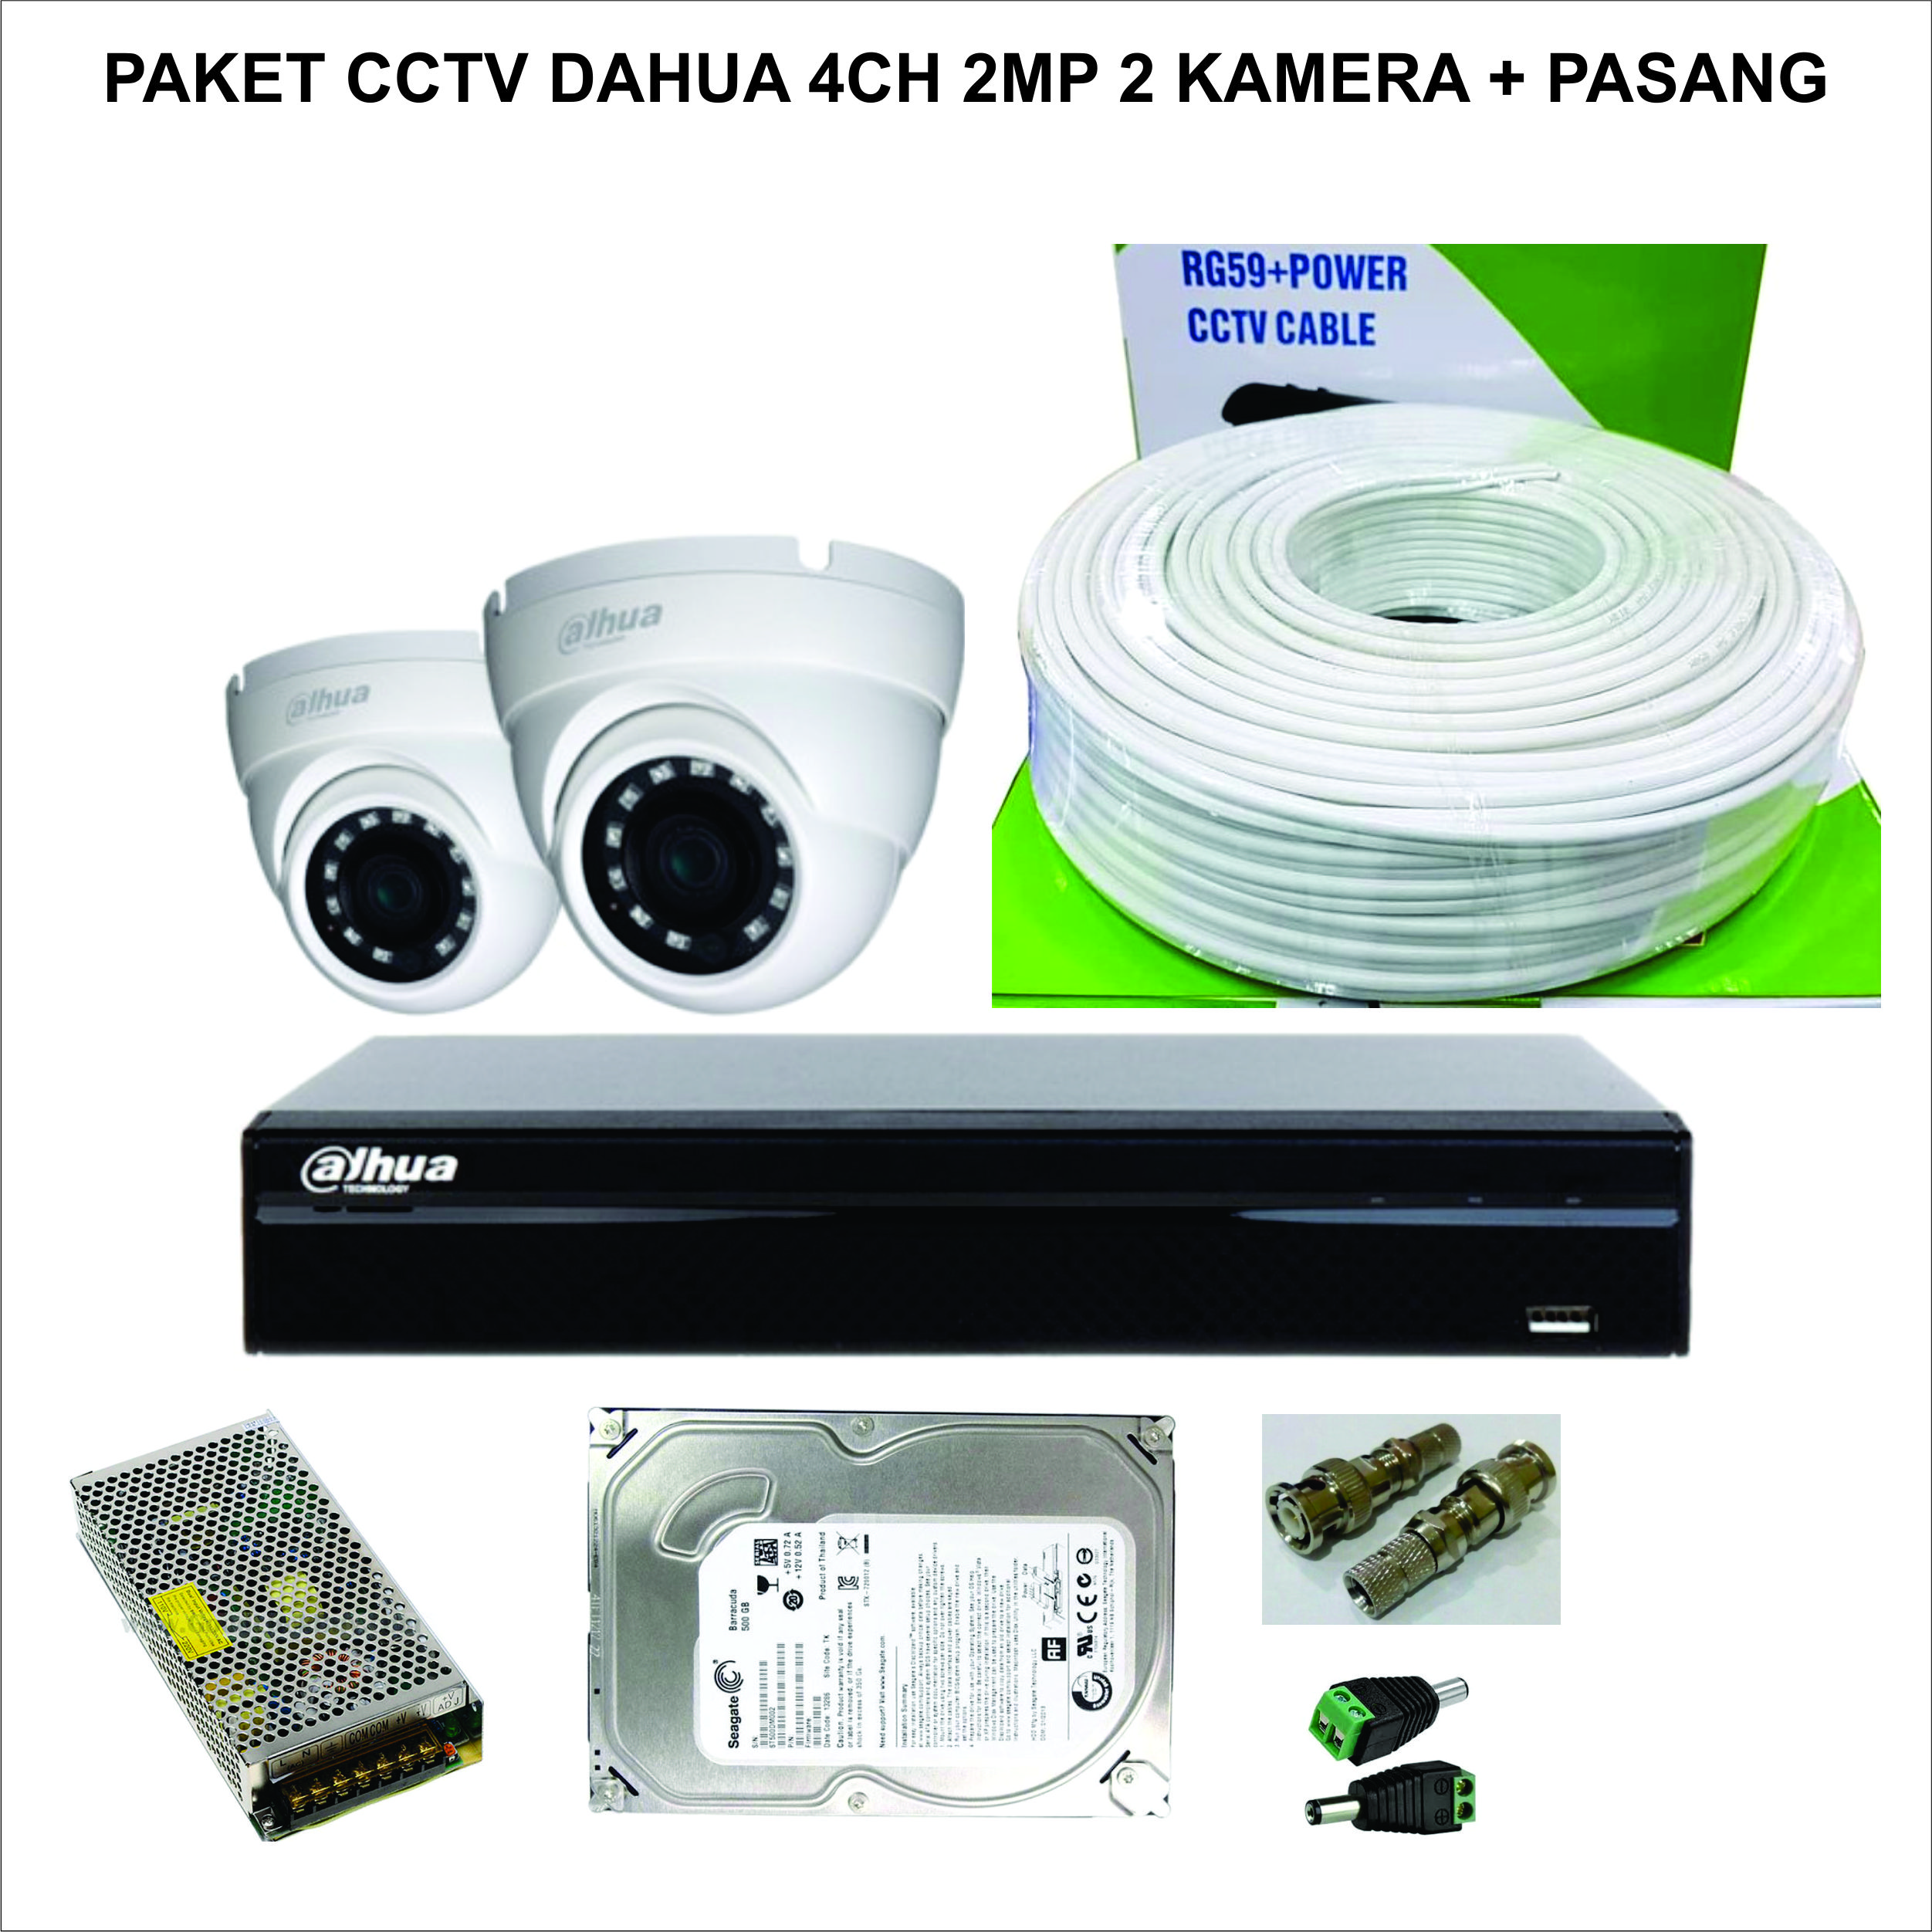 Paket CCTV Dahua 4Ch 2MP 2 Kamera + Pasang